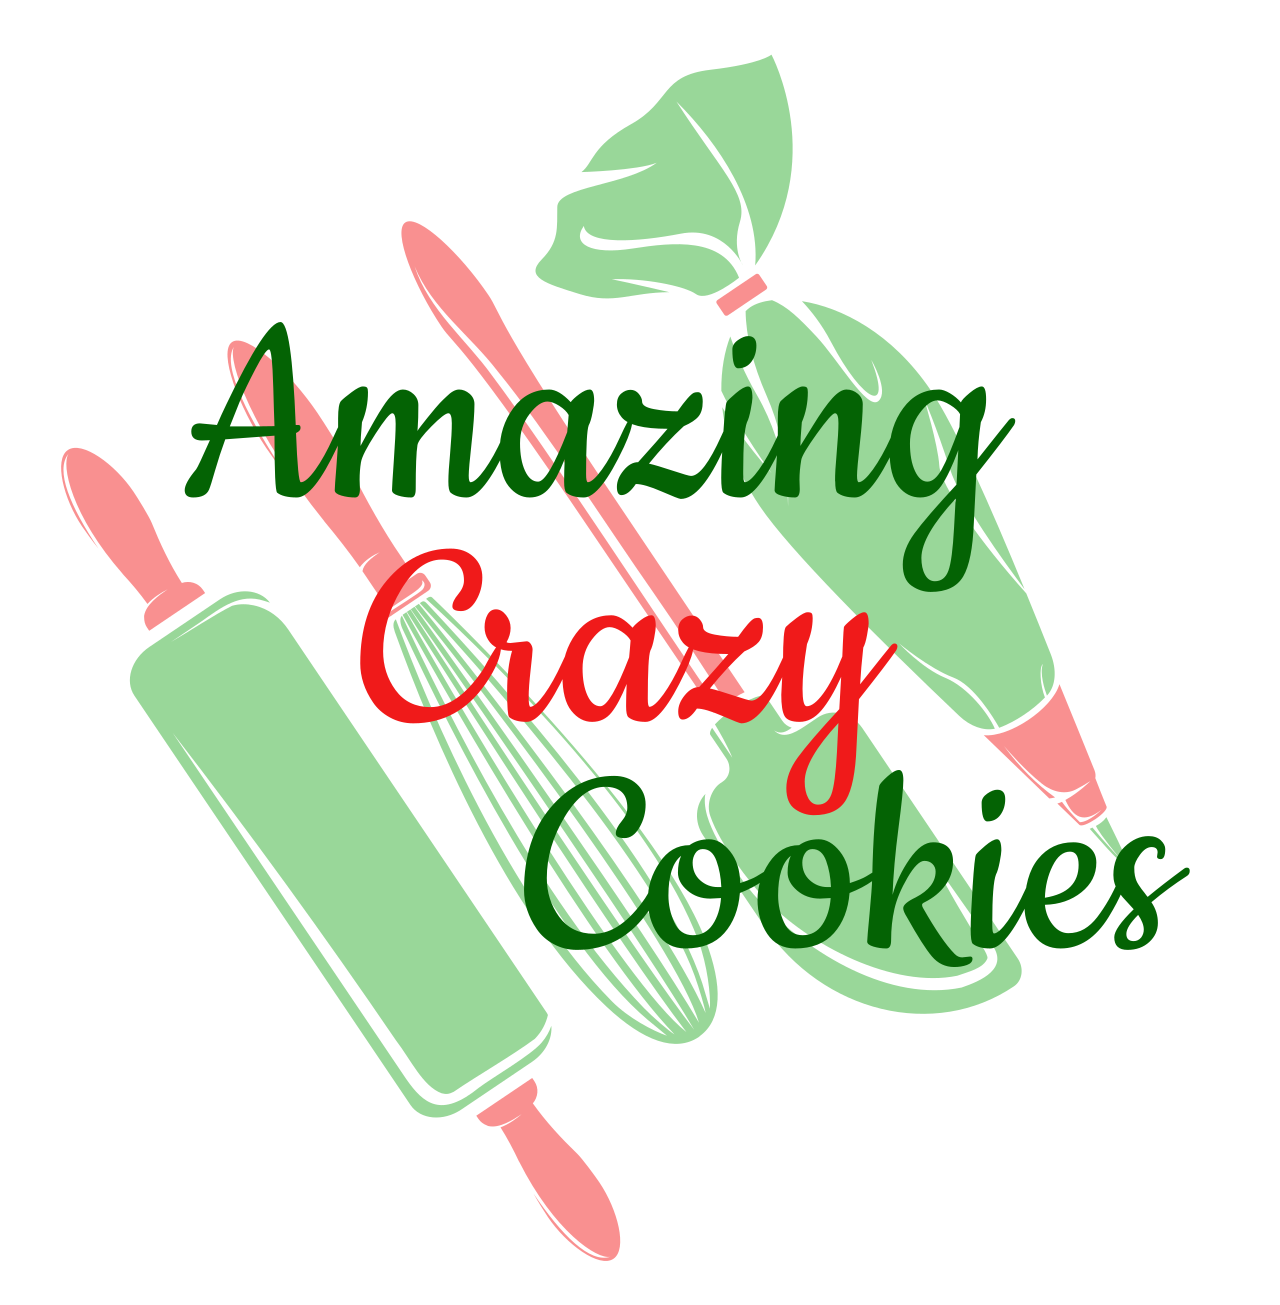 Amazing Crazy Cookies's web page